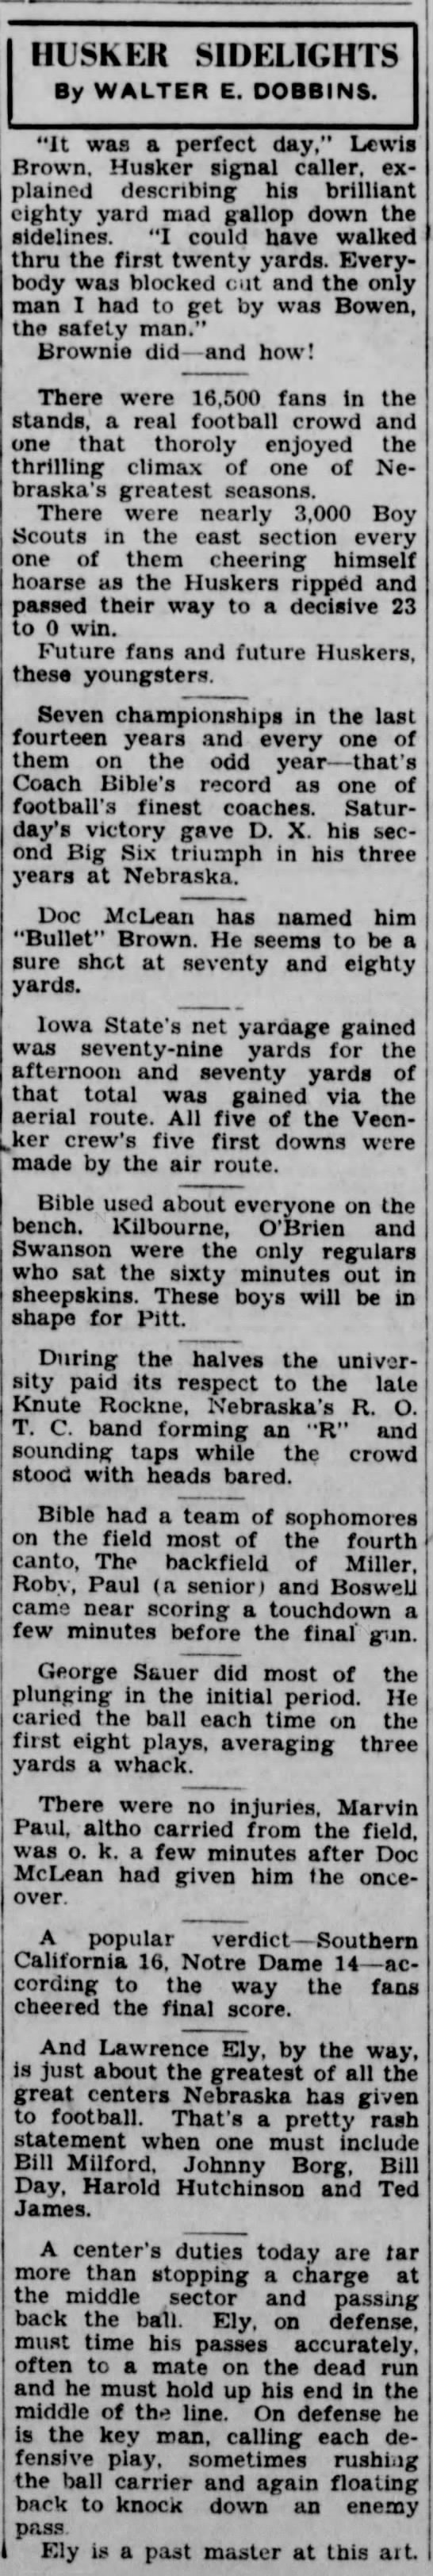 1931 Nebraska-Iowa State football notes - 